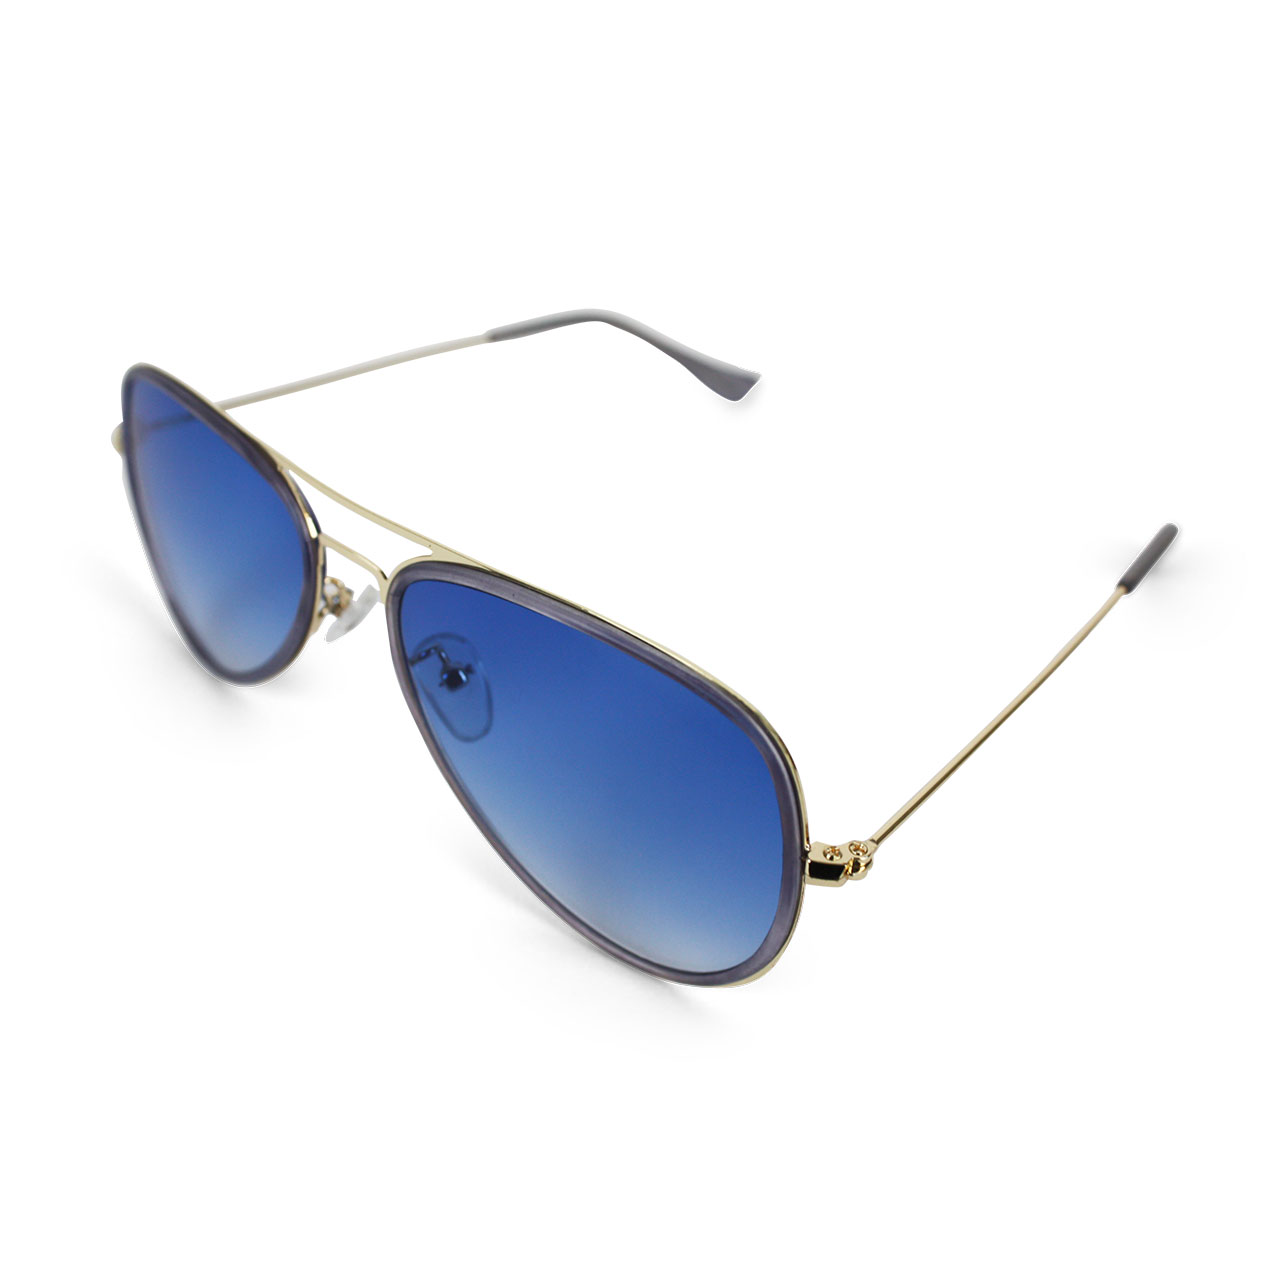 Unisex Aviator Polarized Vintage Blue Sunglasses Lens